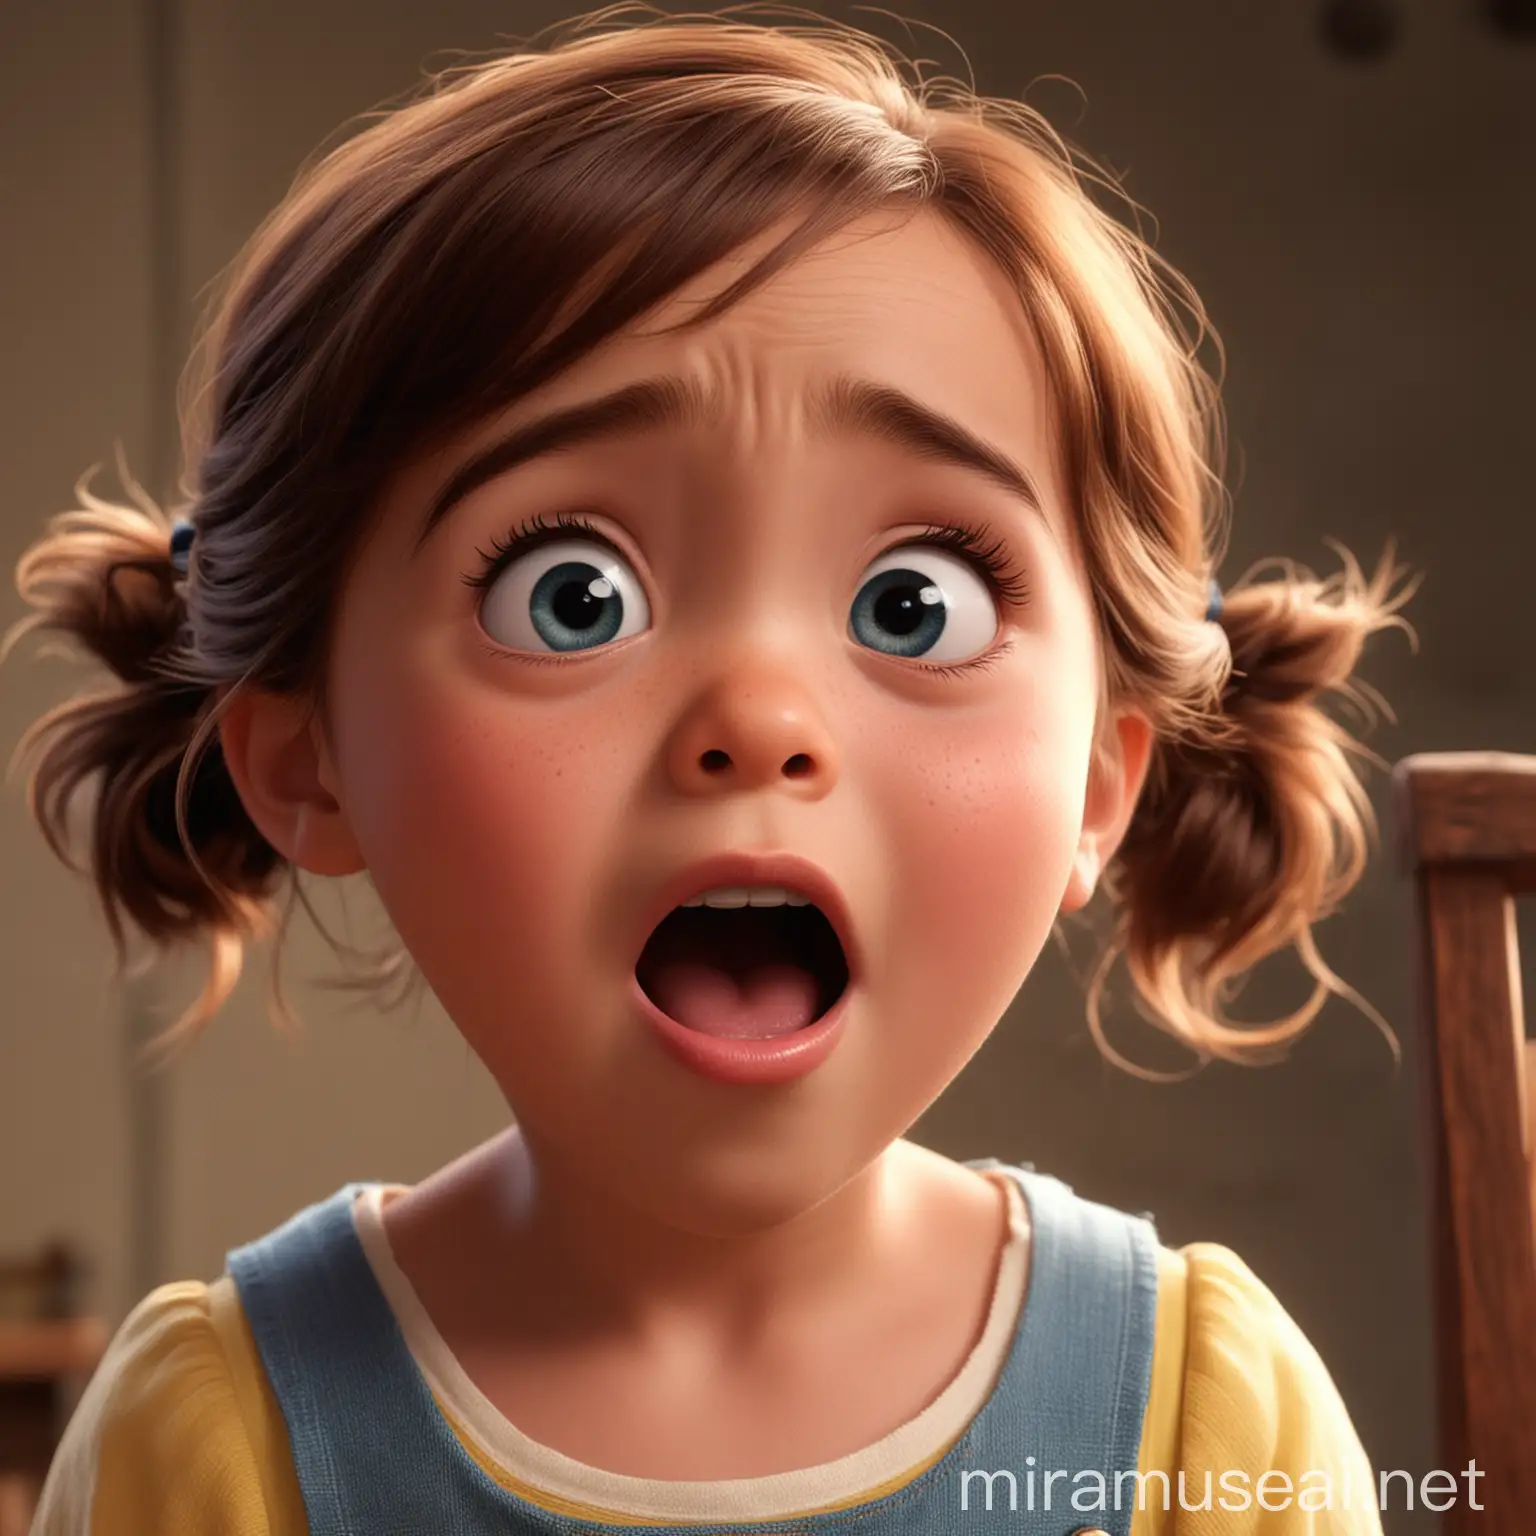 Surprised Little Girl in Disney Pixar Style